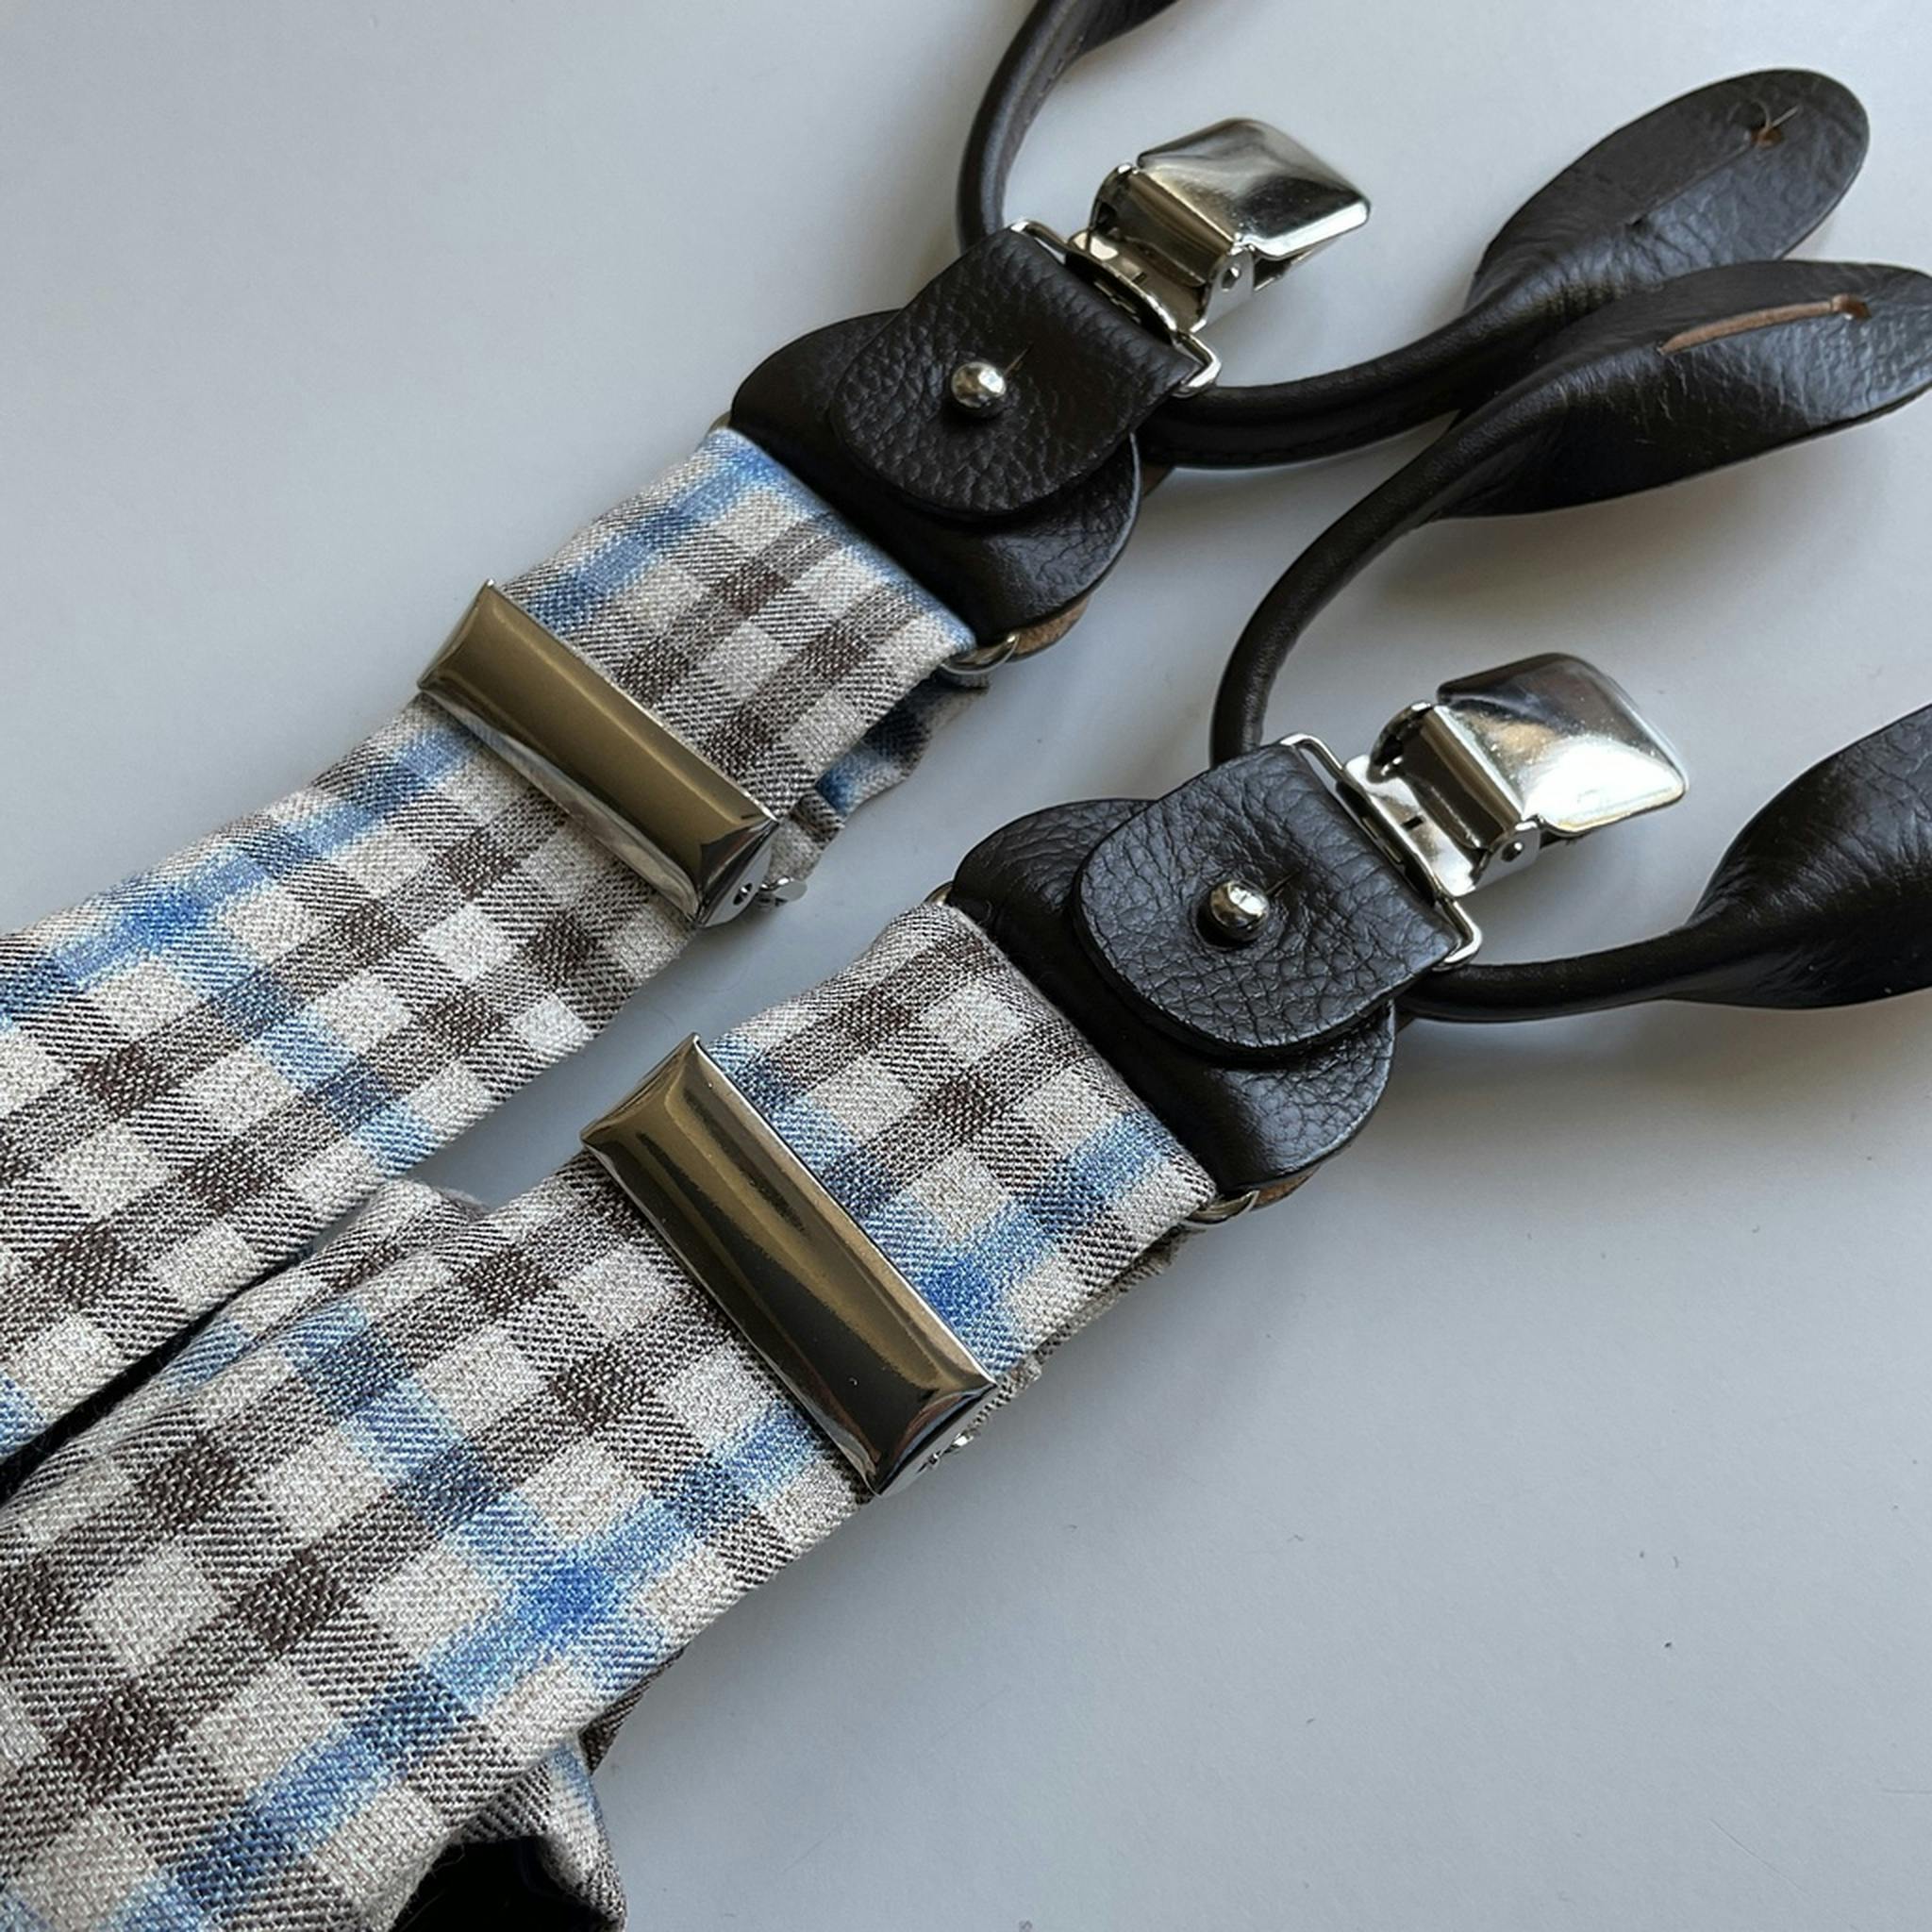 Plaide Cotton/Wool/Silk Suspenders - Beige/Brown/Blue